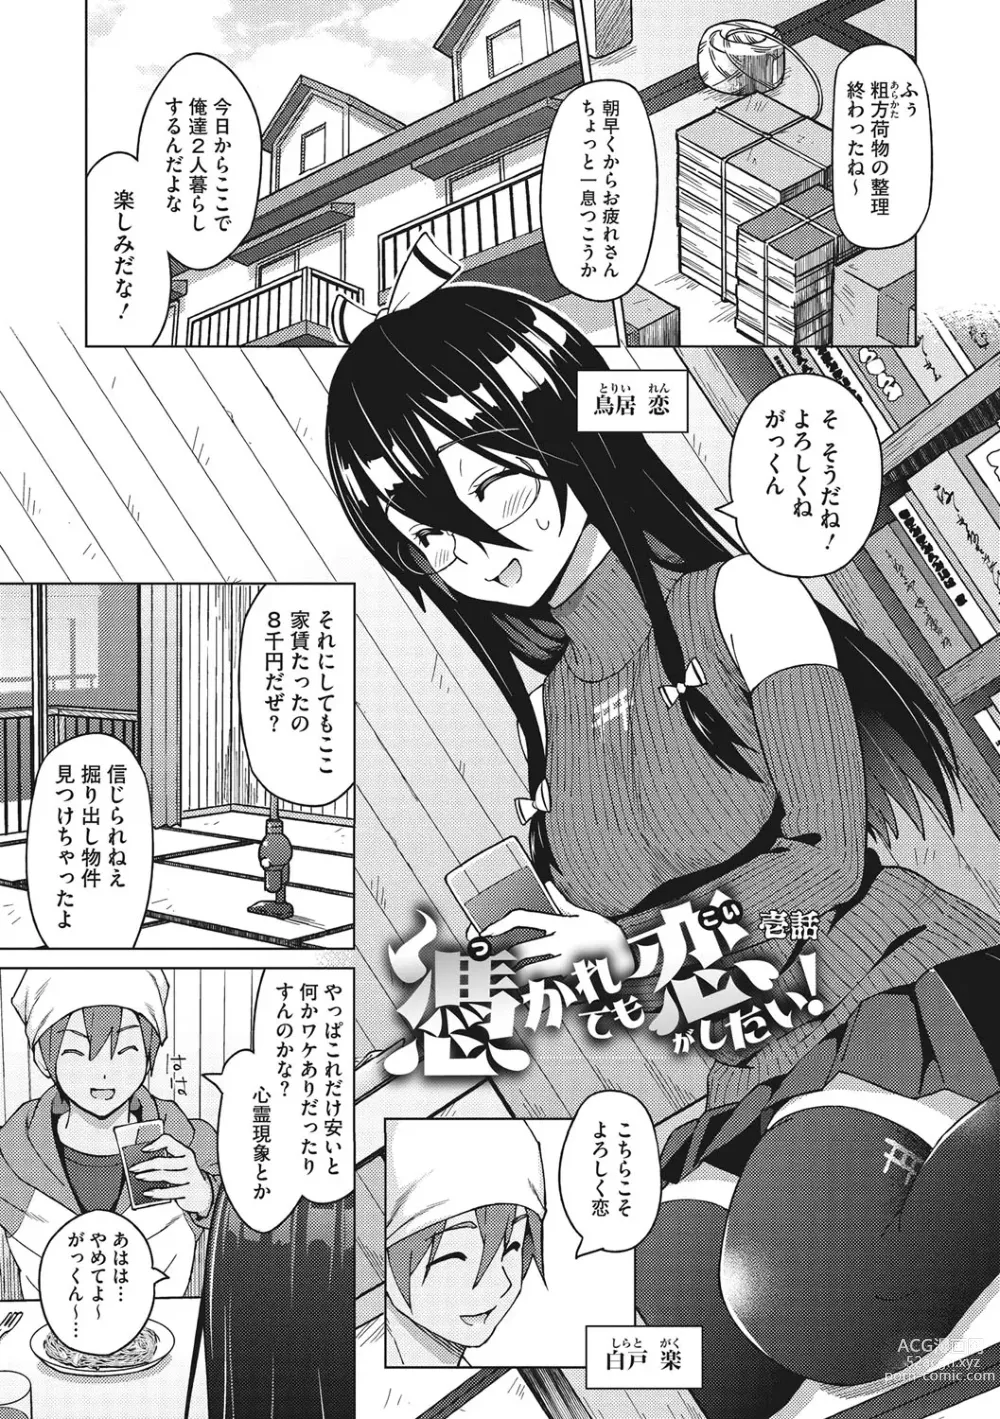 Page 4 of manga Risky Play